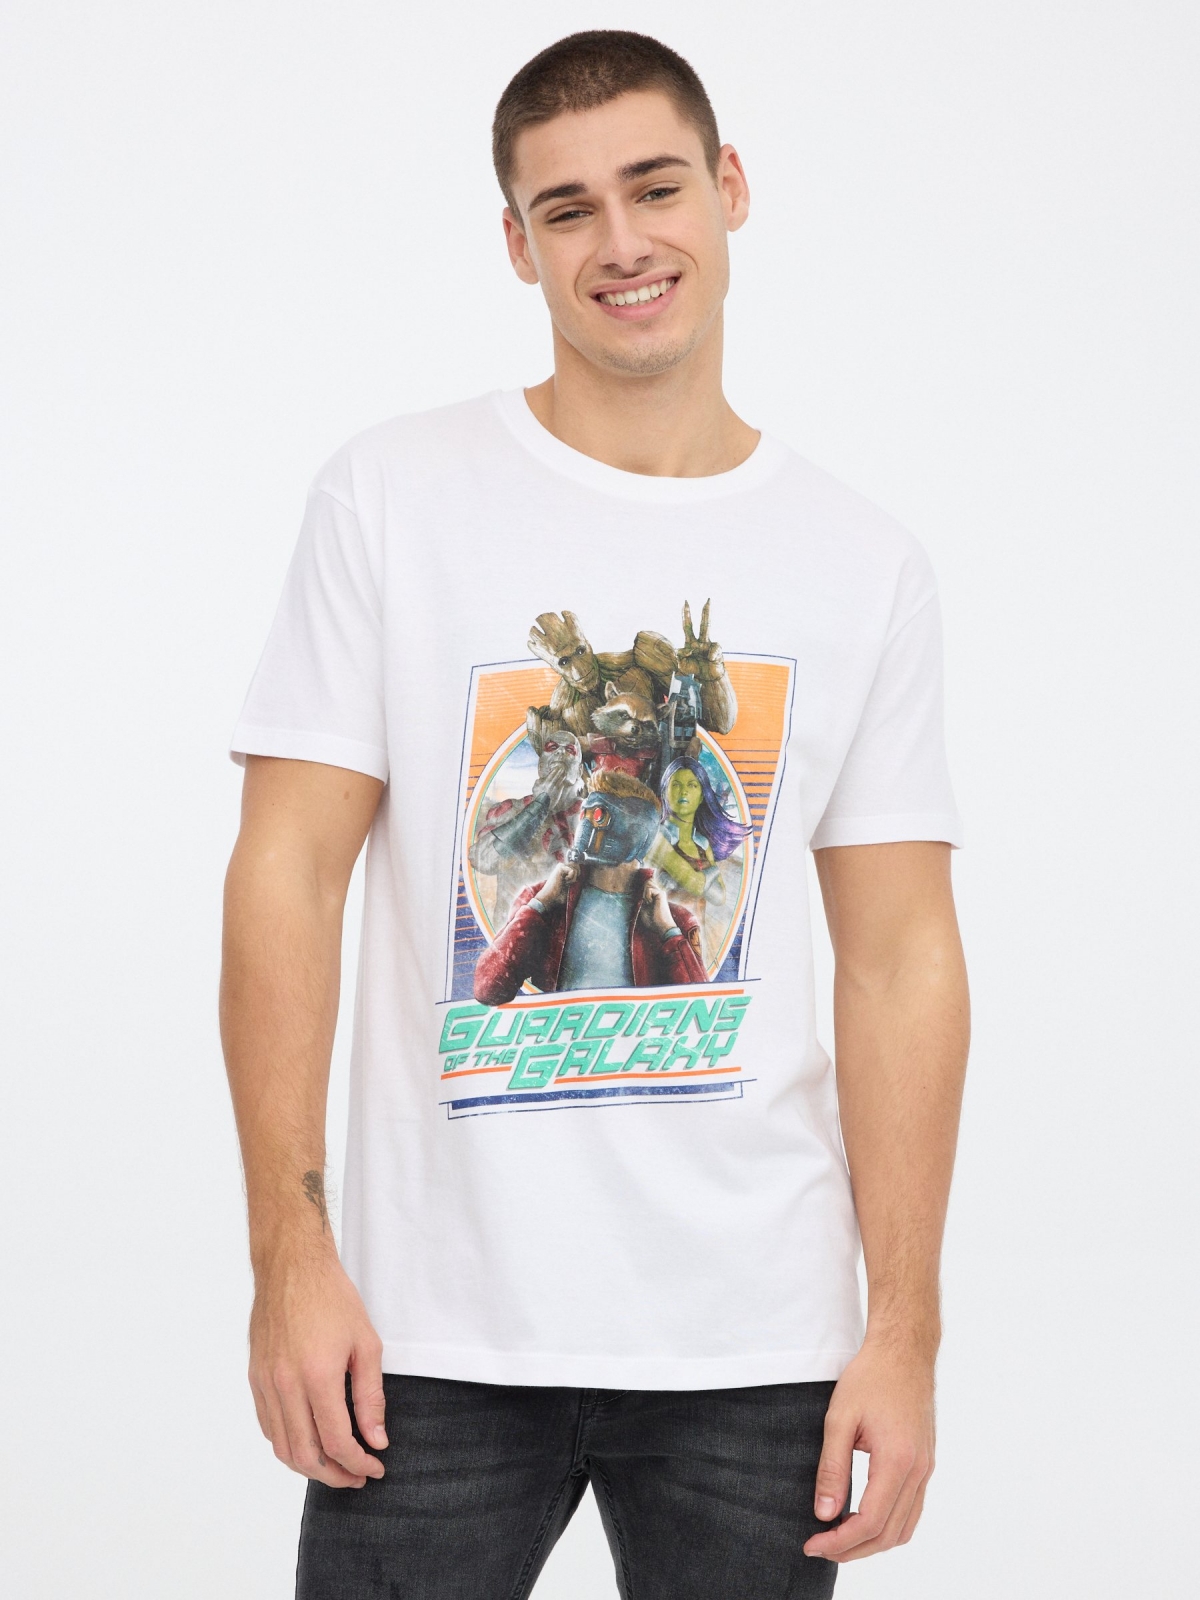 Camiseta Guardians of the Galaxy blanco vista media frontal